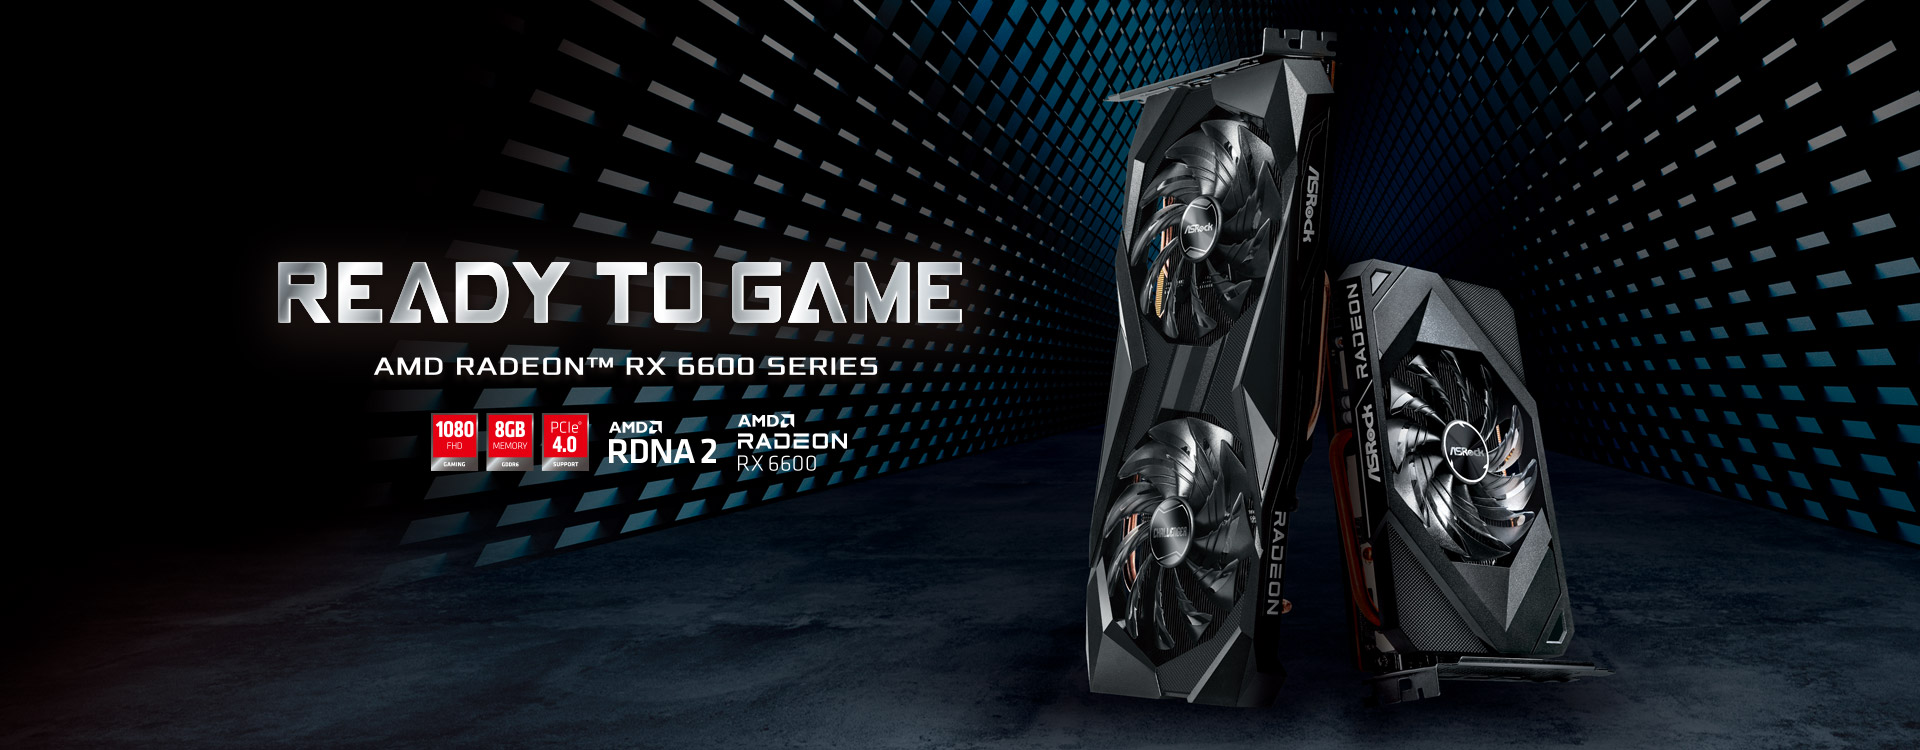 AMD RX 6600 Launch